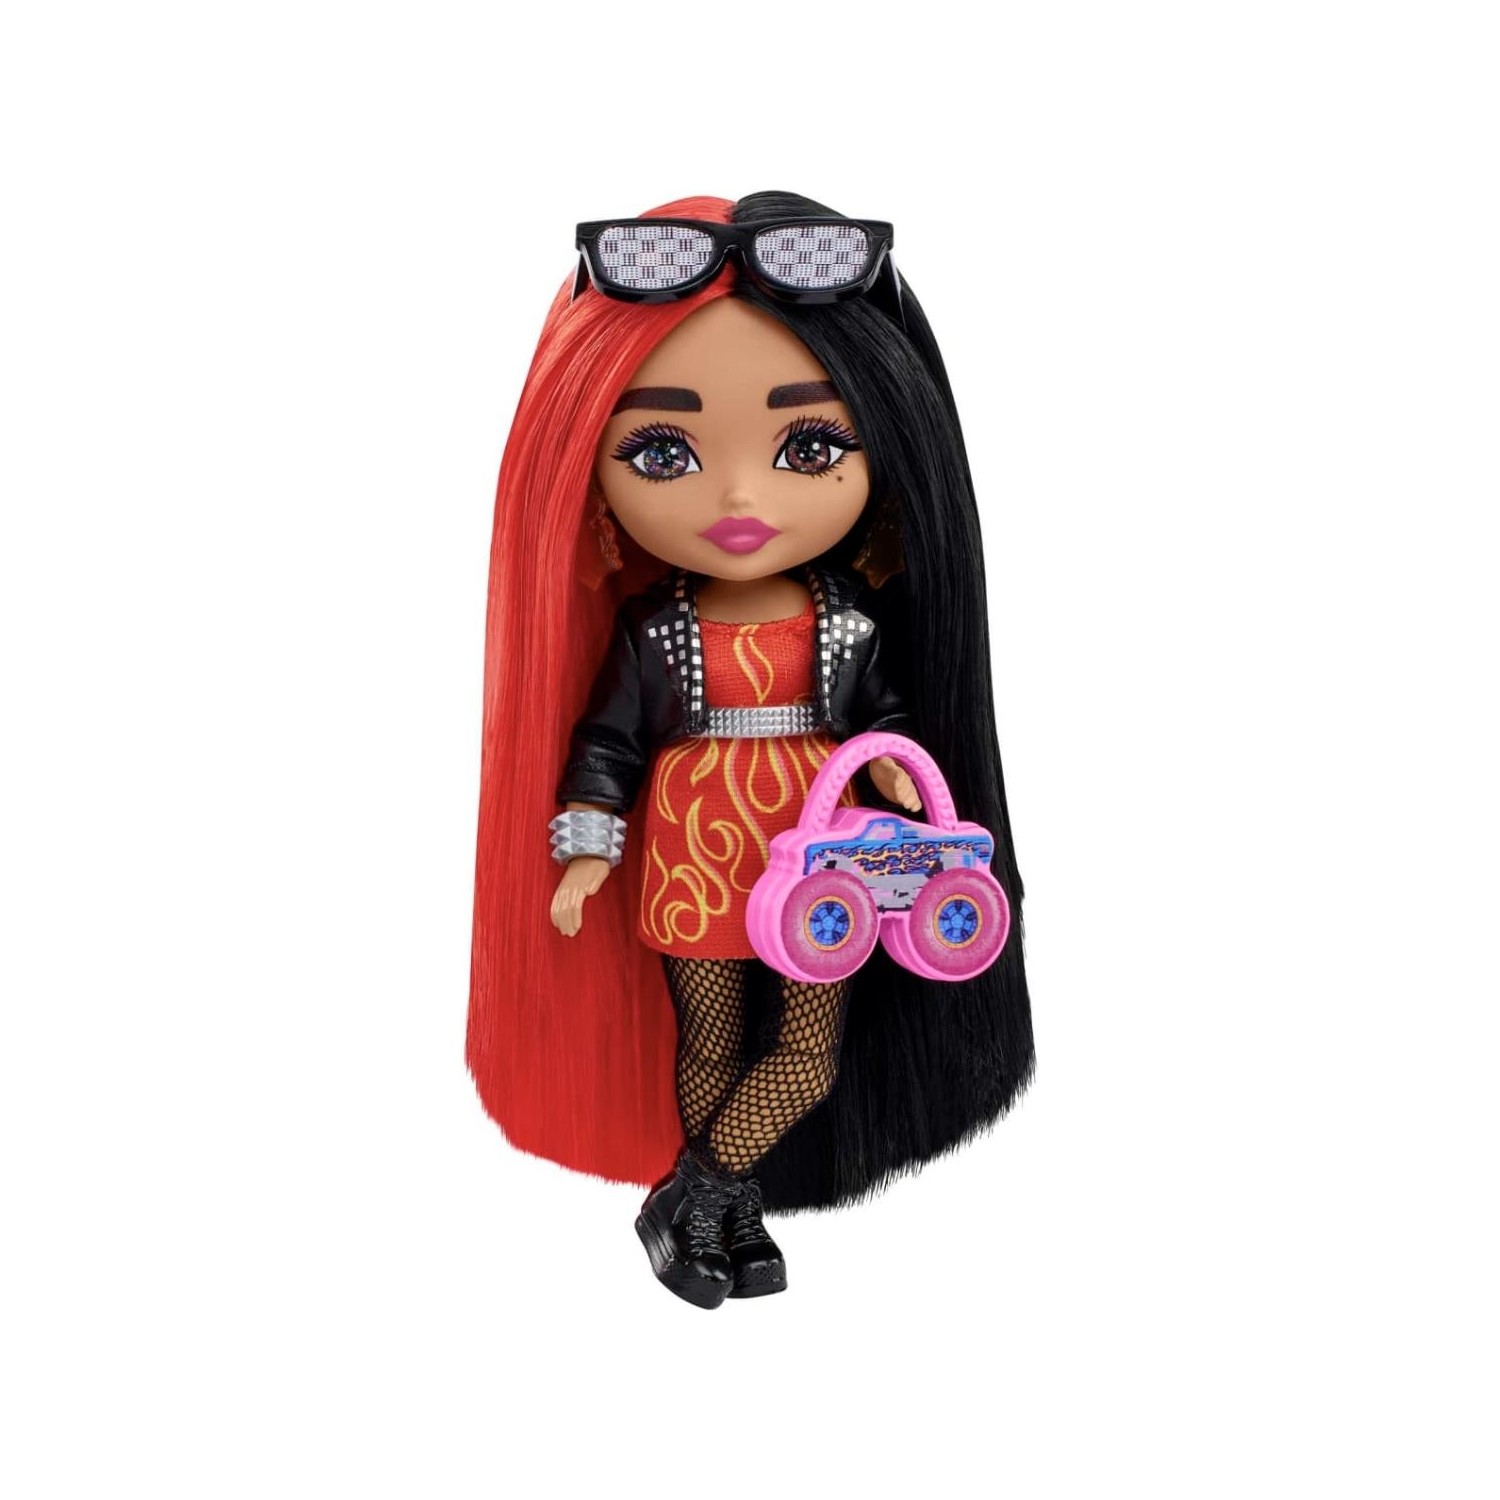 Кукла Barbie Extra Mini Dolls HGP62 HKP88 кукла mattel barbie экстра мини с красно чёрными волосами hkp88